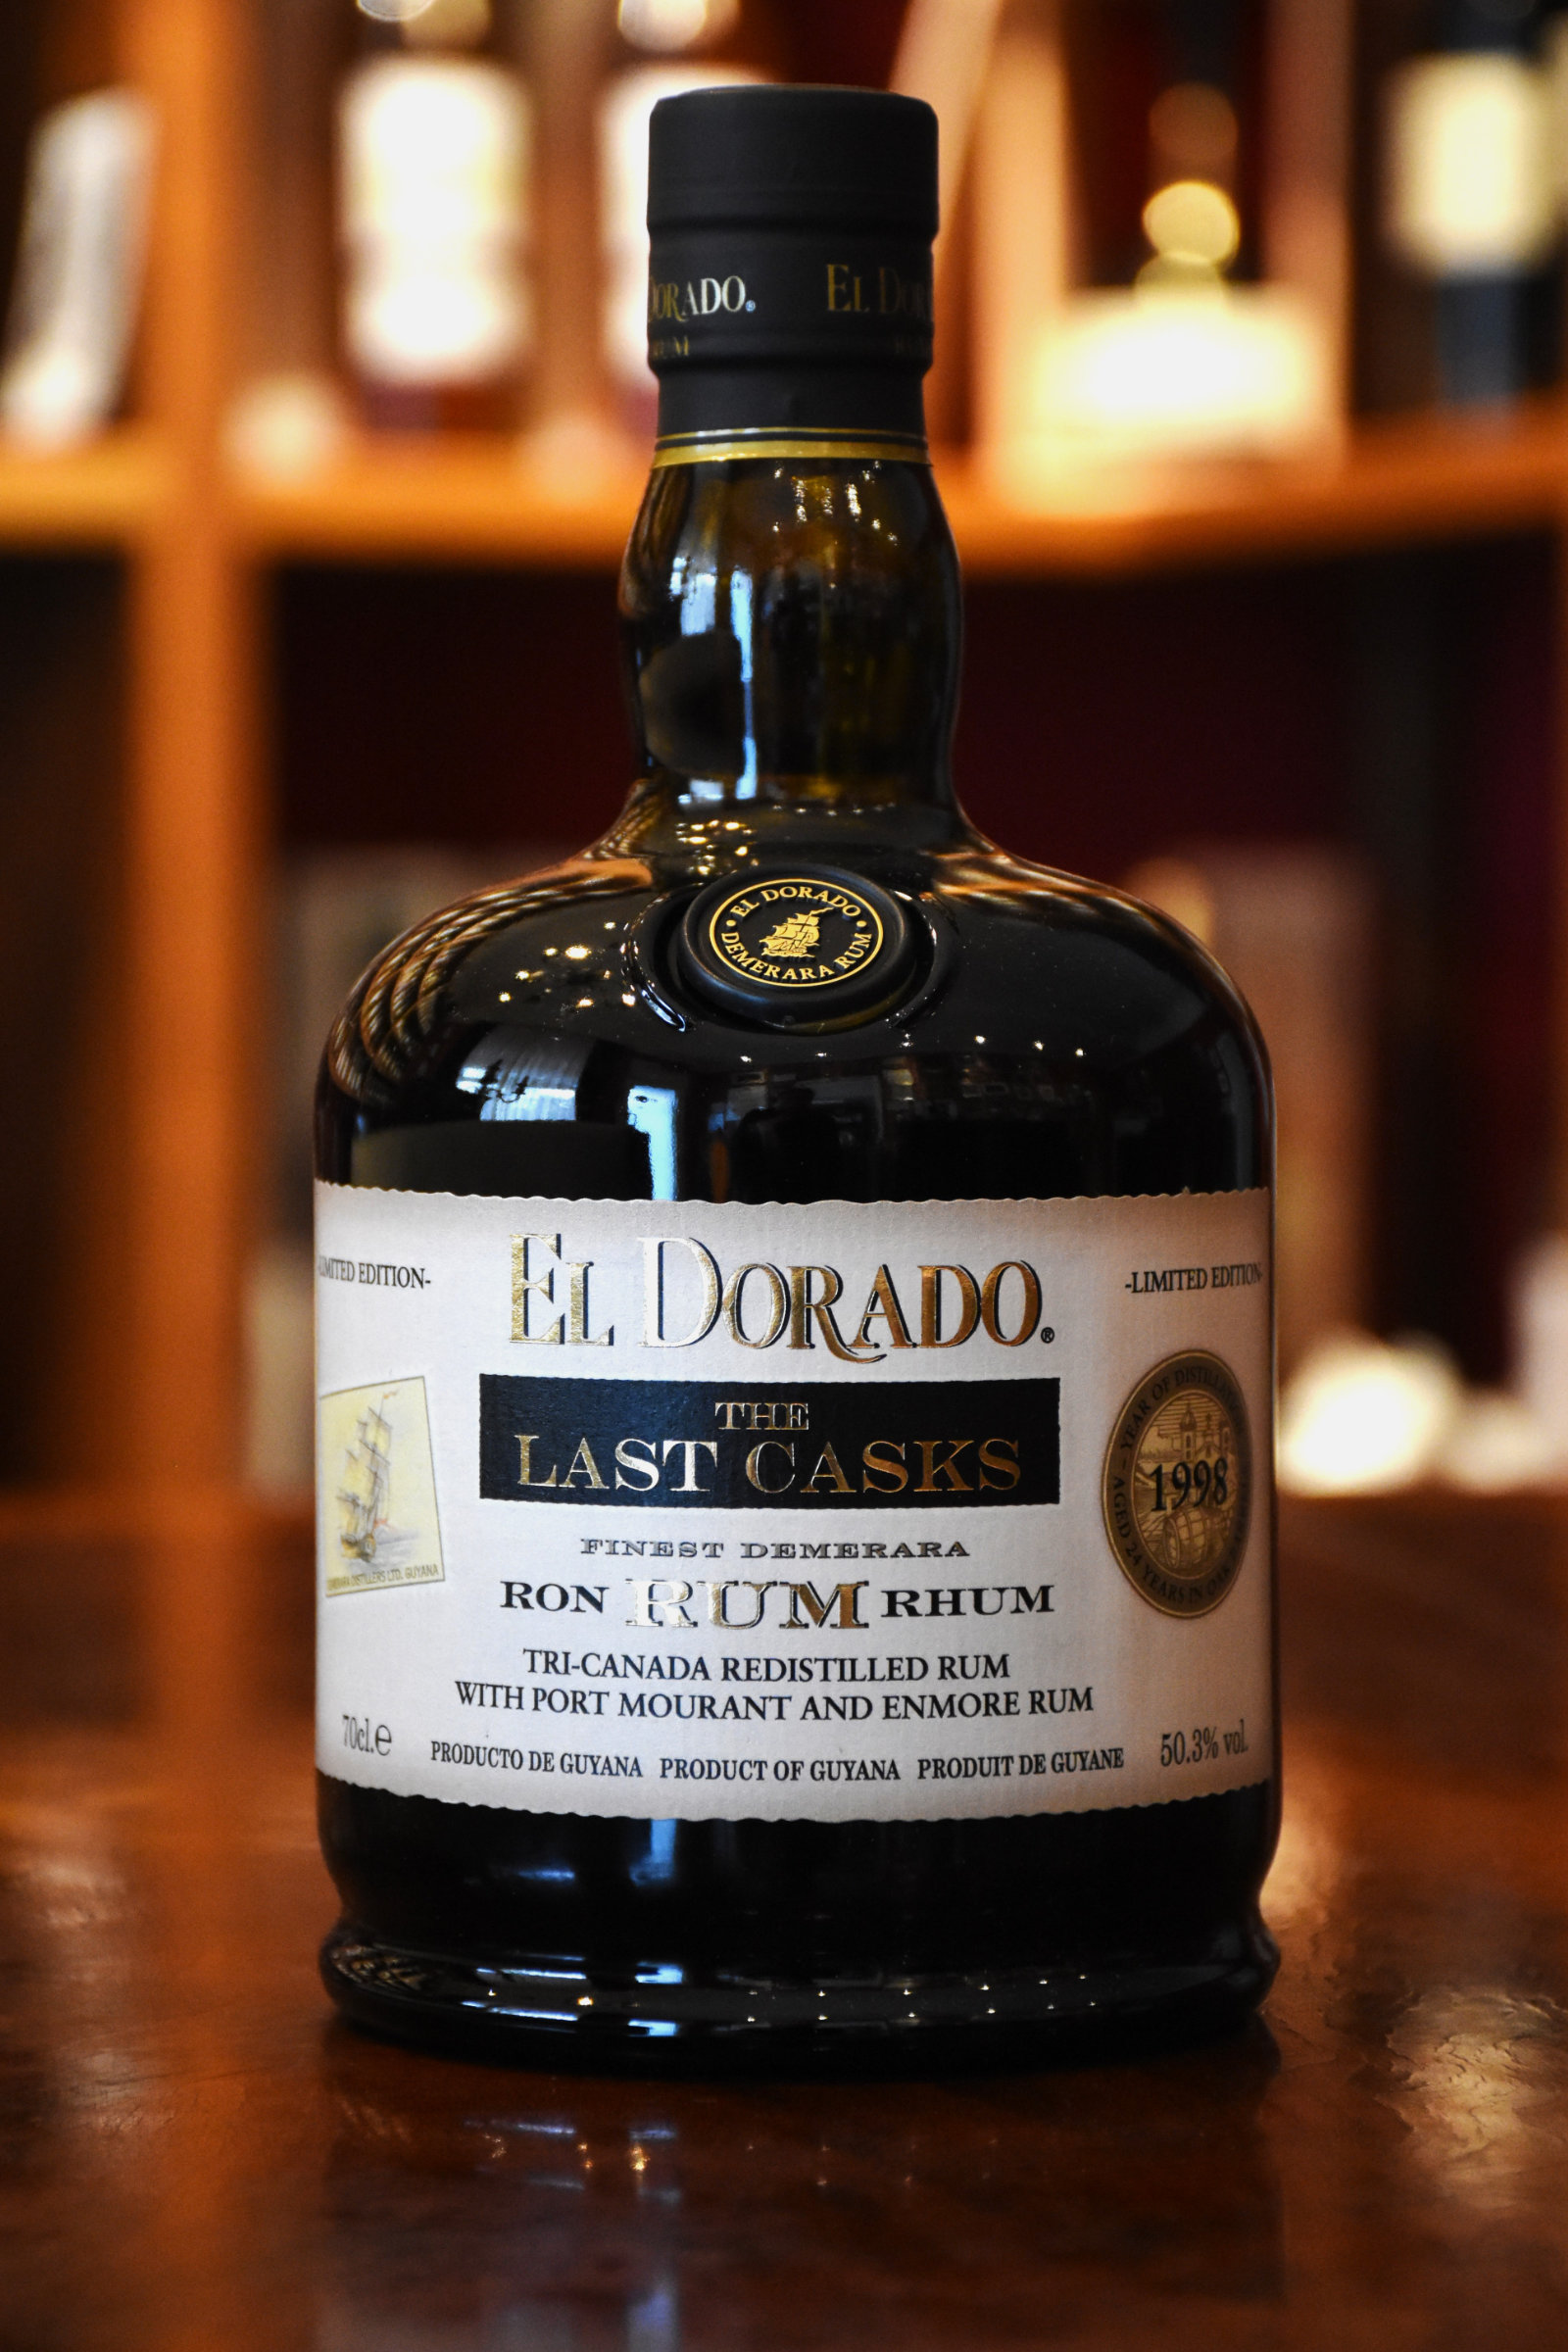 El Dorado, The Last Casks - Black Label, 1998/2022, 50,3% Alc.Vol., Demerara Distillers